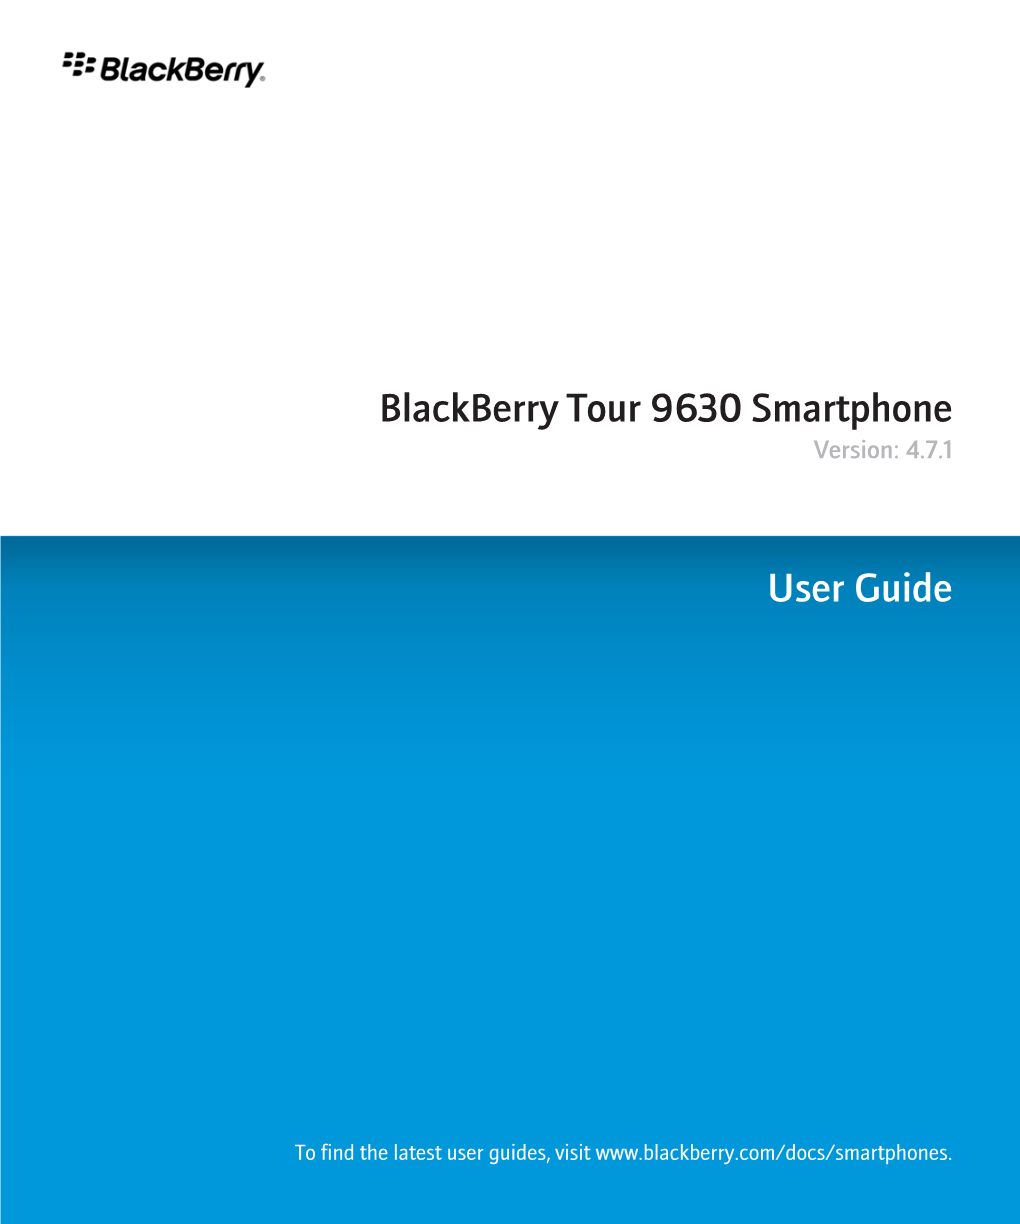 Blackberry Tour 9630 Smartphone Version: 4.7.1